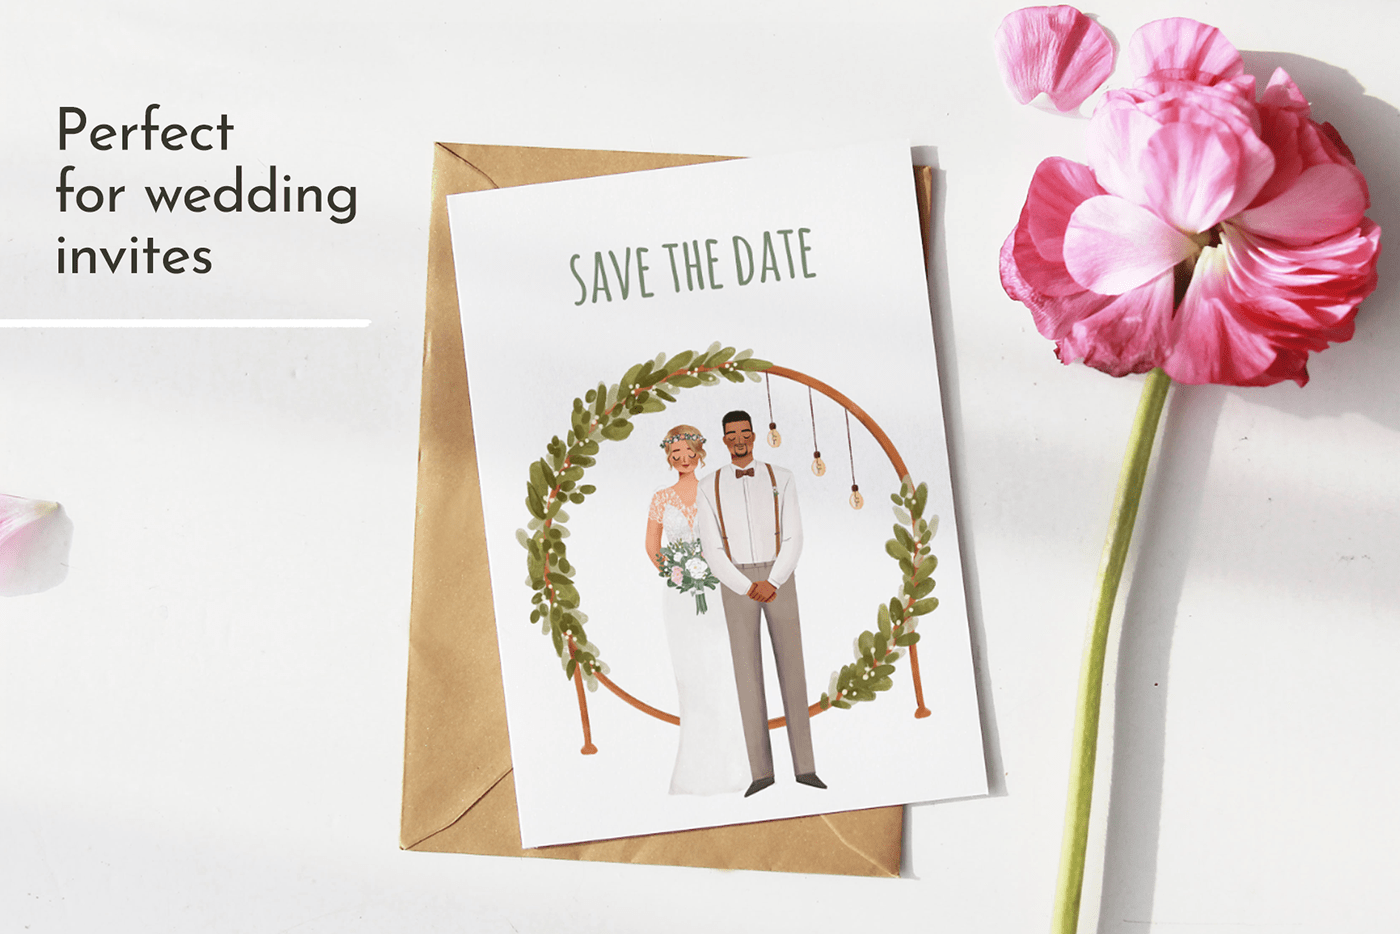 bohemian botanical illustration bride ceremony couple digital illustration groom rustic wedding invitation watercolor illustration